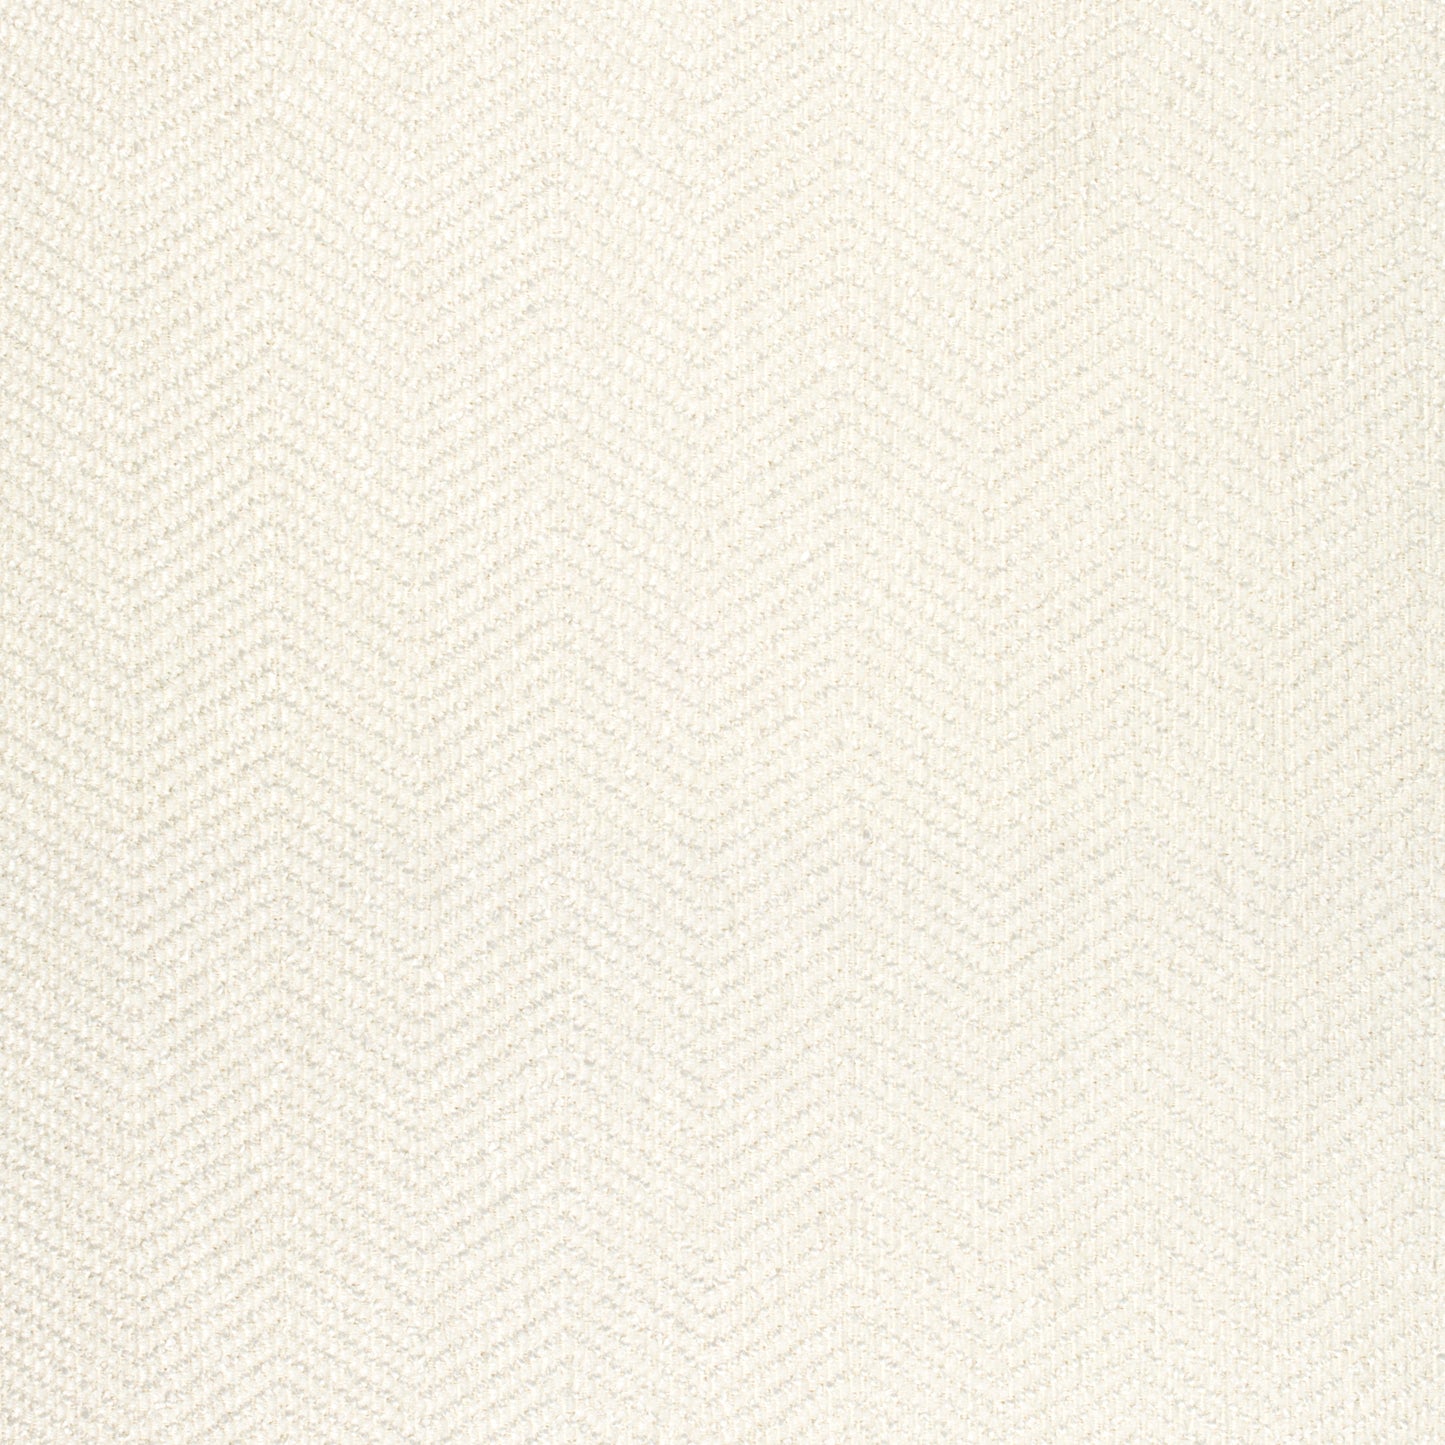 Purchase Thibaut Fabric Pattern number W80621 pattern name Dalton Herringbone color Ivory